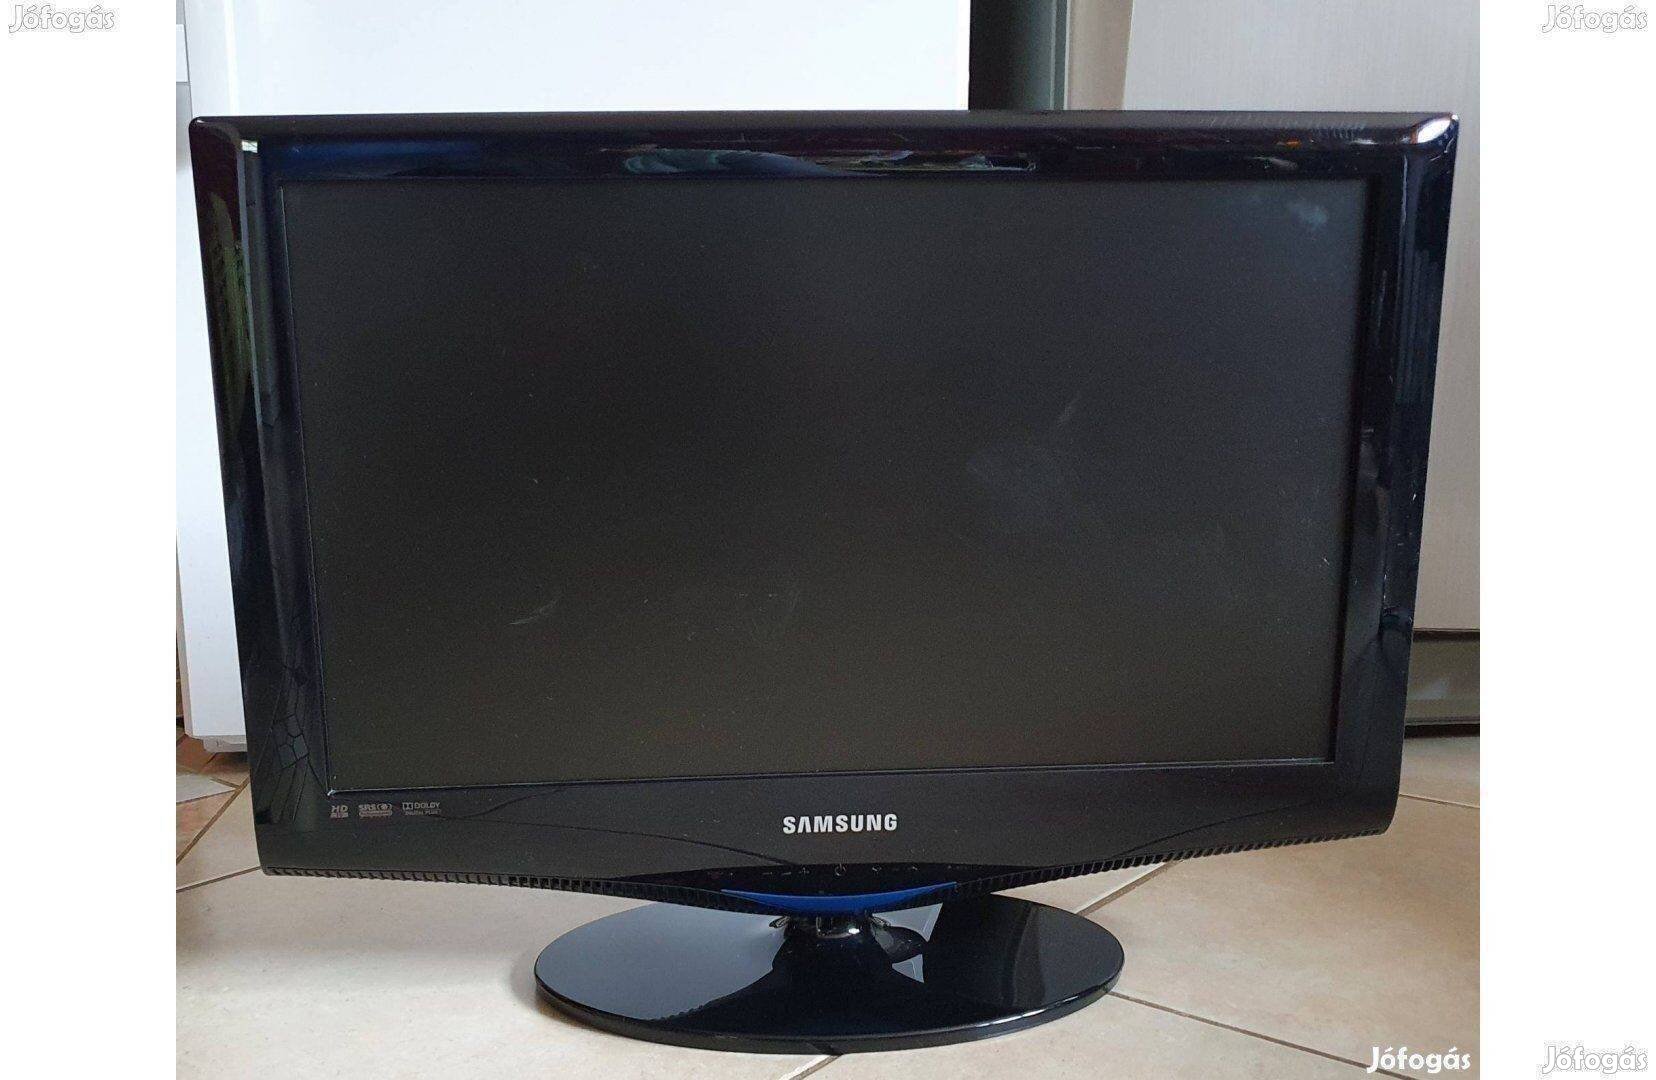 Samsung LCD TV / monitor 22 '